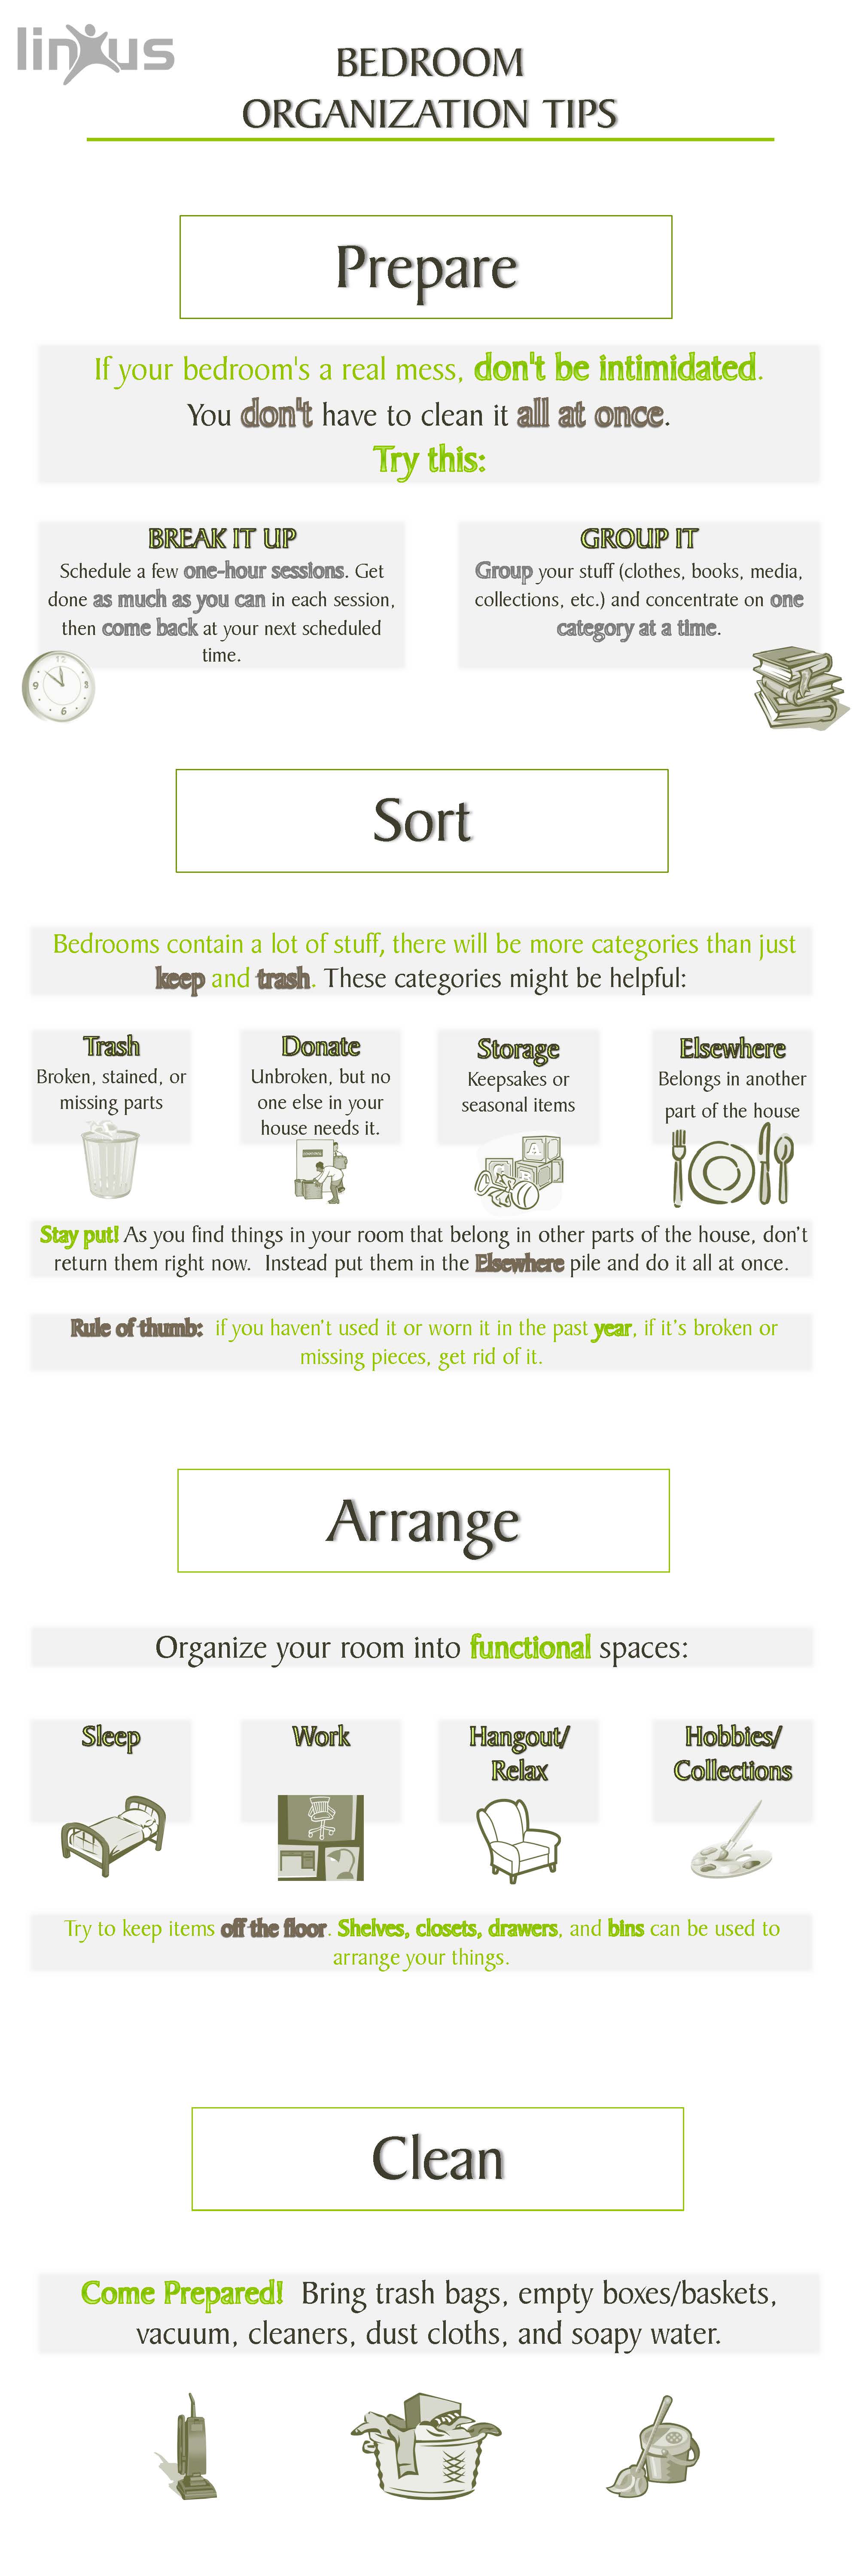 Bedroom Organization Tips_infographic